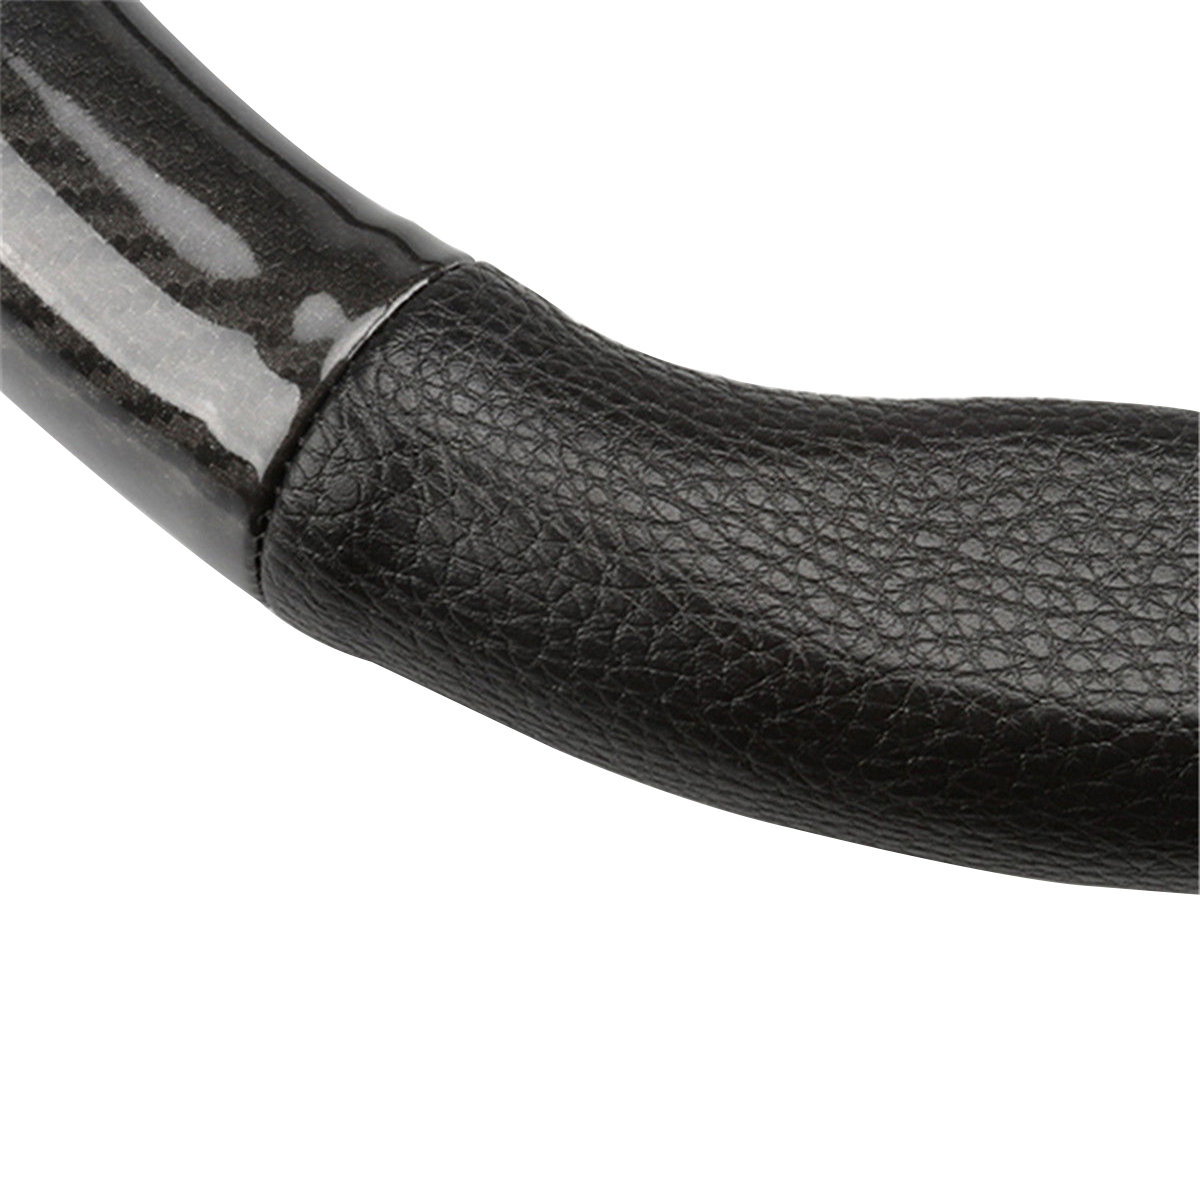 38cm-Carbon-Fiber-Leather-Stitching-Car-Steering-Wheel-Covers-Anti-Slip-Black-Universal-1366514